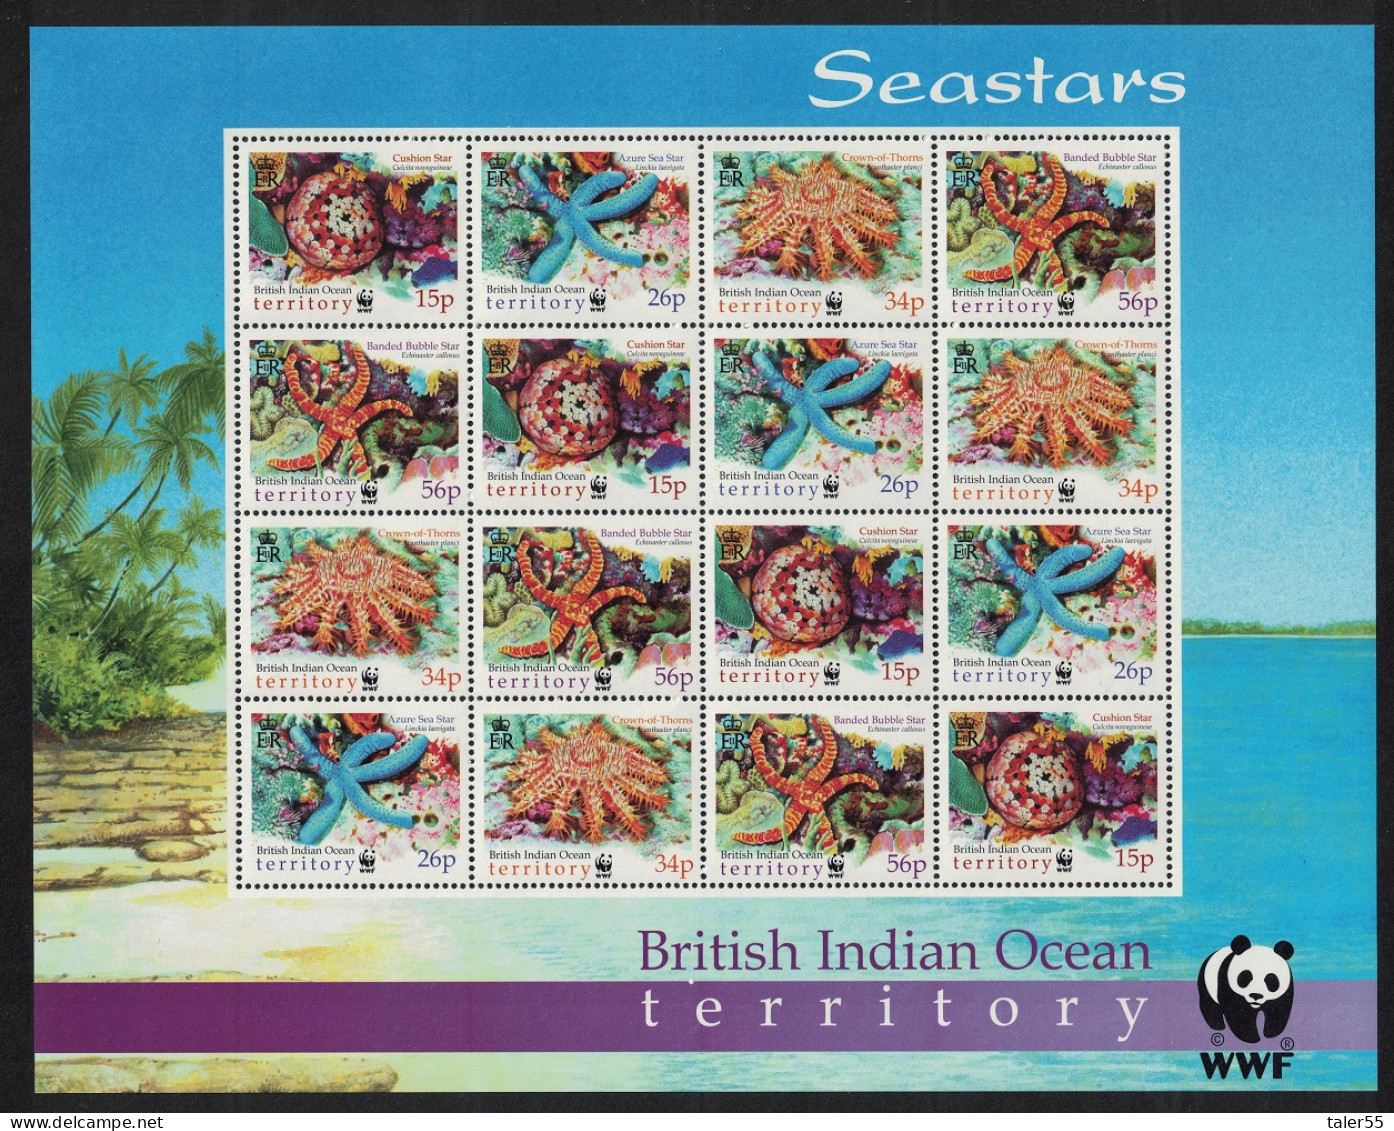 BIOT WWF Sea Stars Sheetlet Of 4 Sets 2001 MNH SG#253-256 MI#266-269 Sc#231-234 - British Indian Ocean Territory (BIOT)